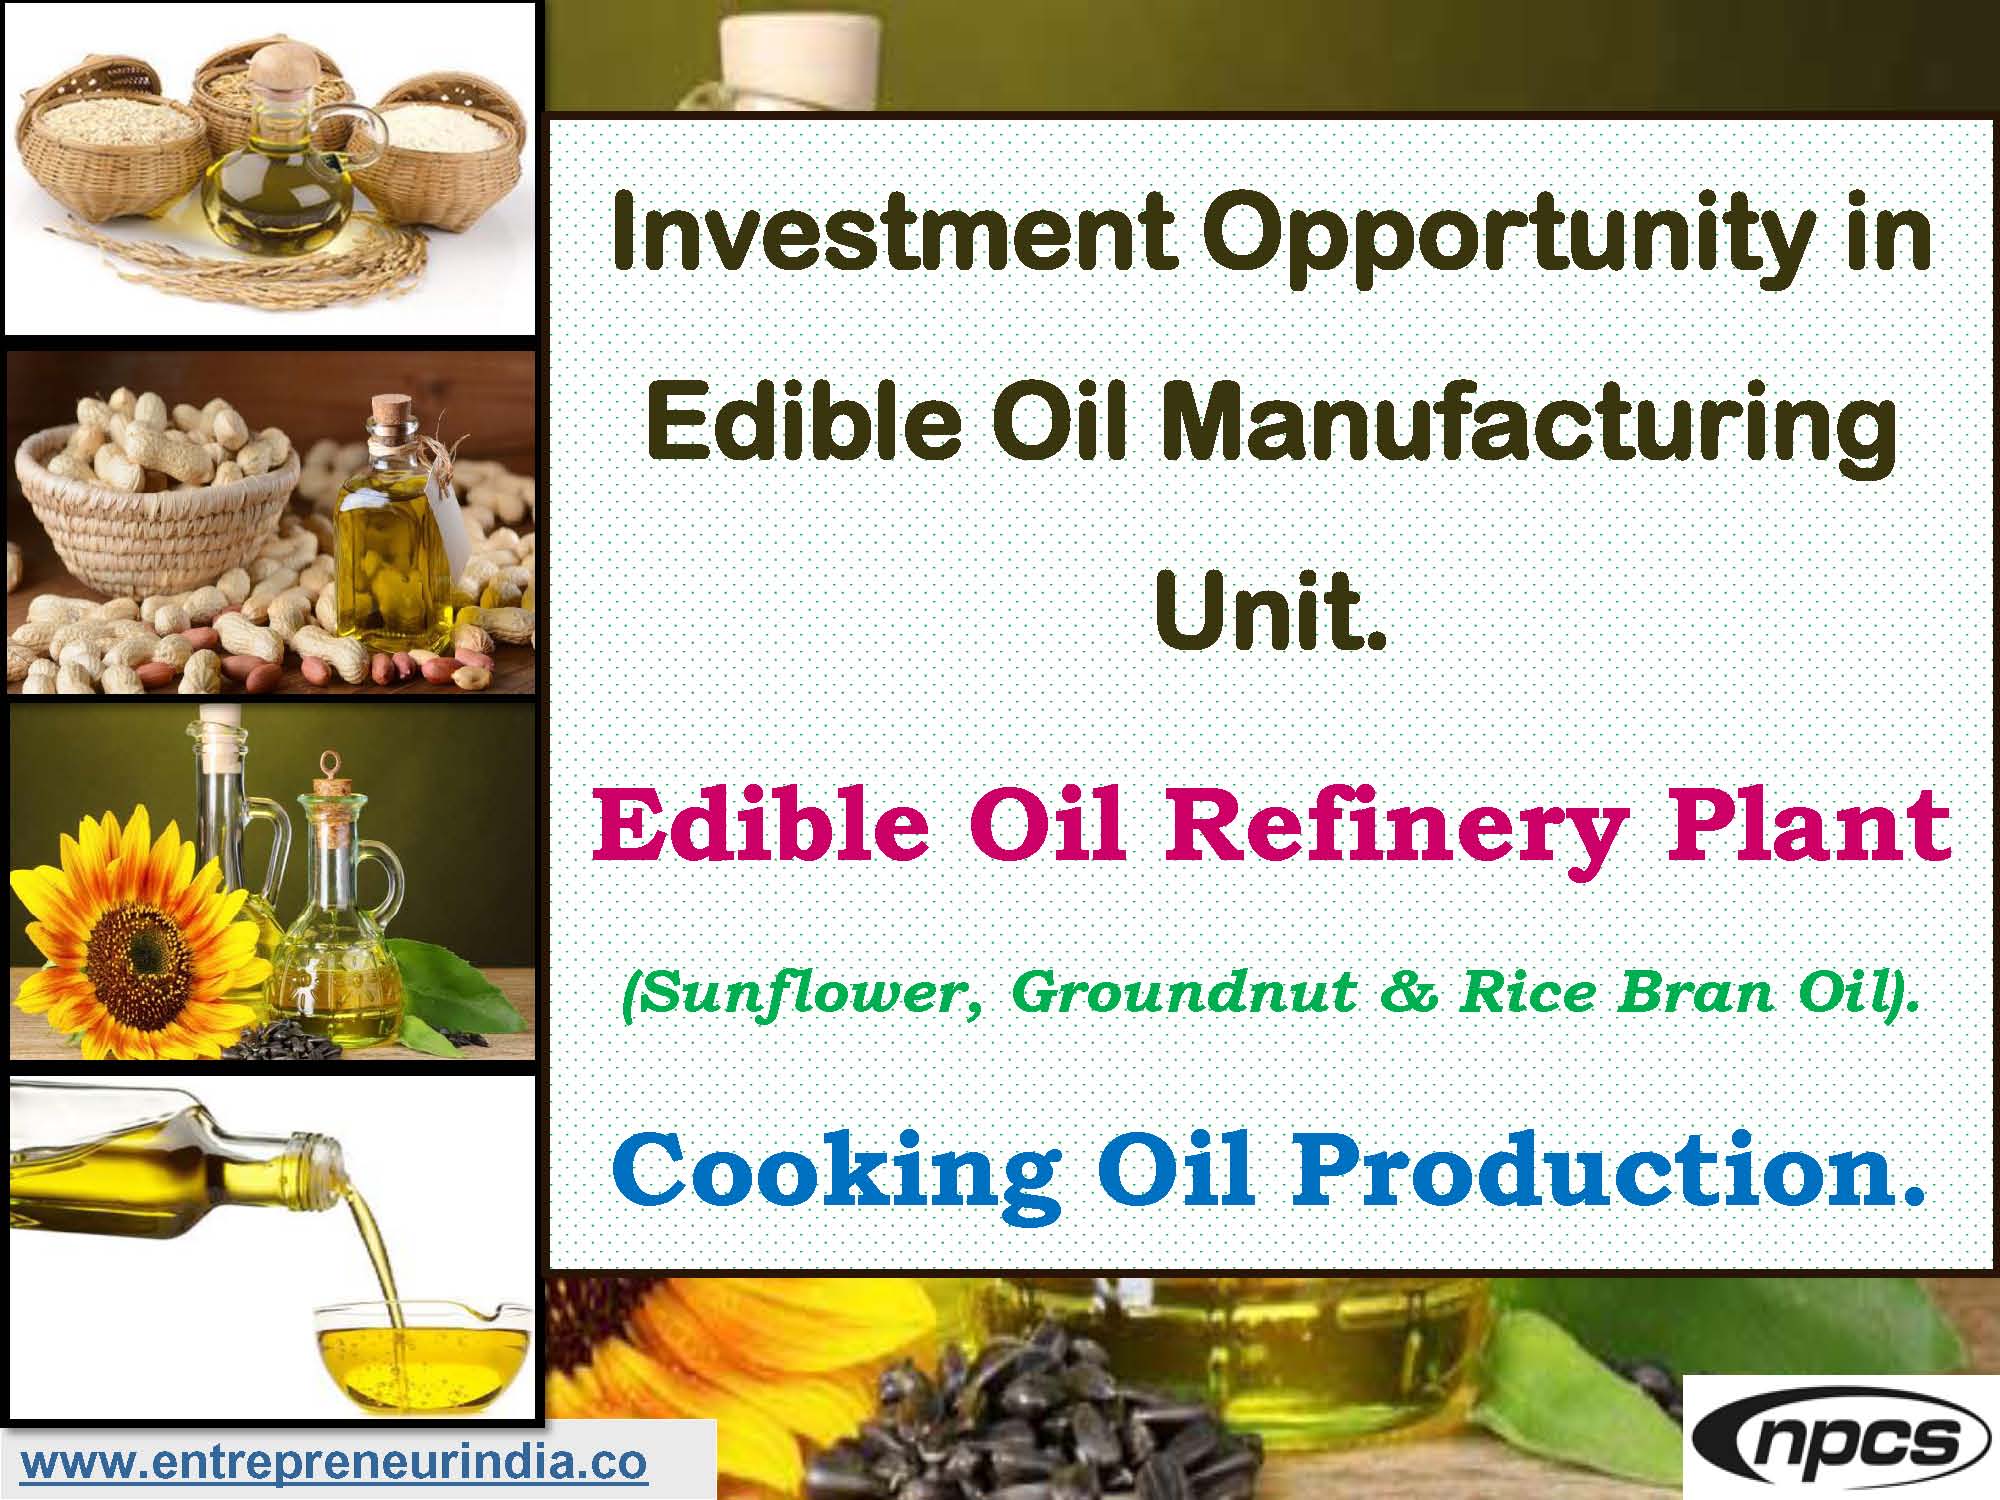 edible oil distribution business plan